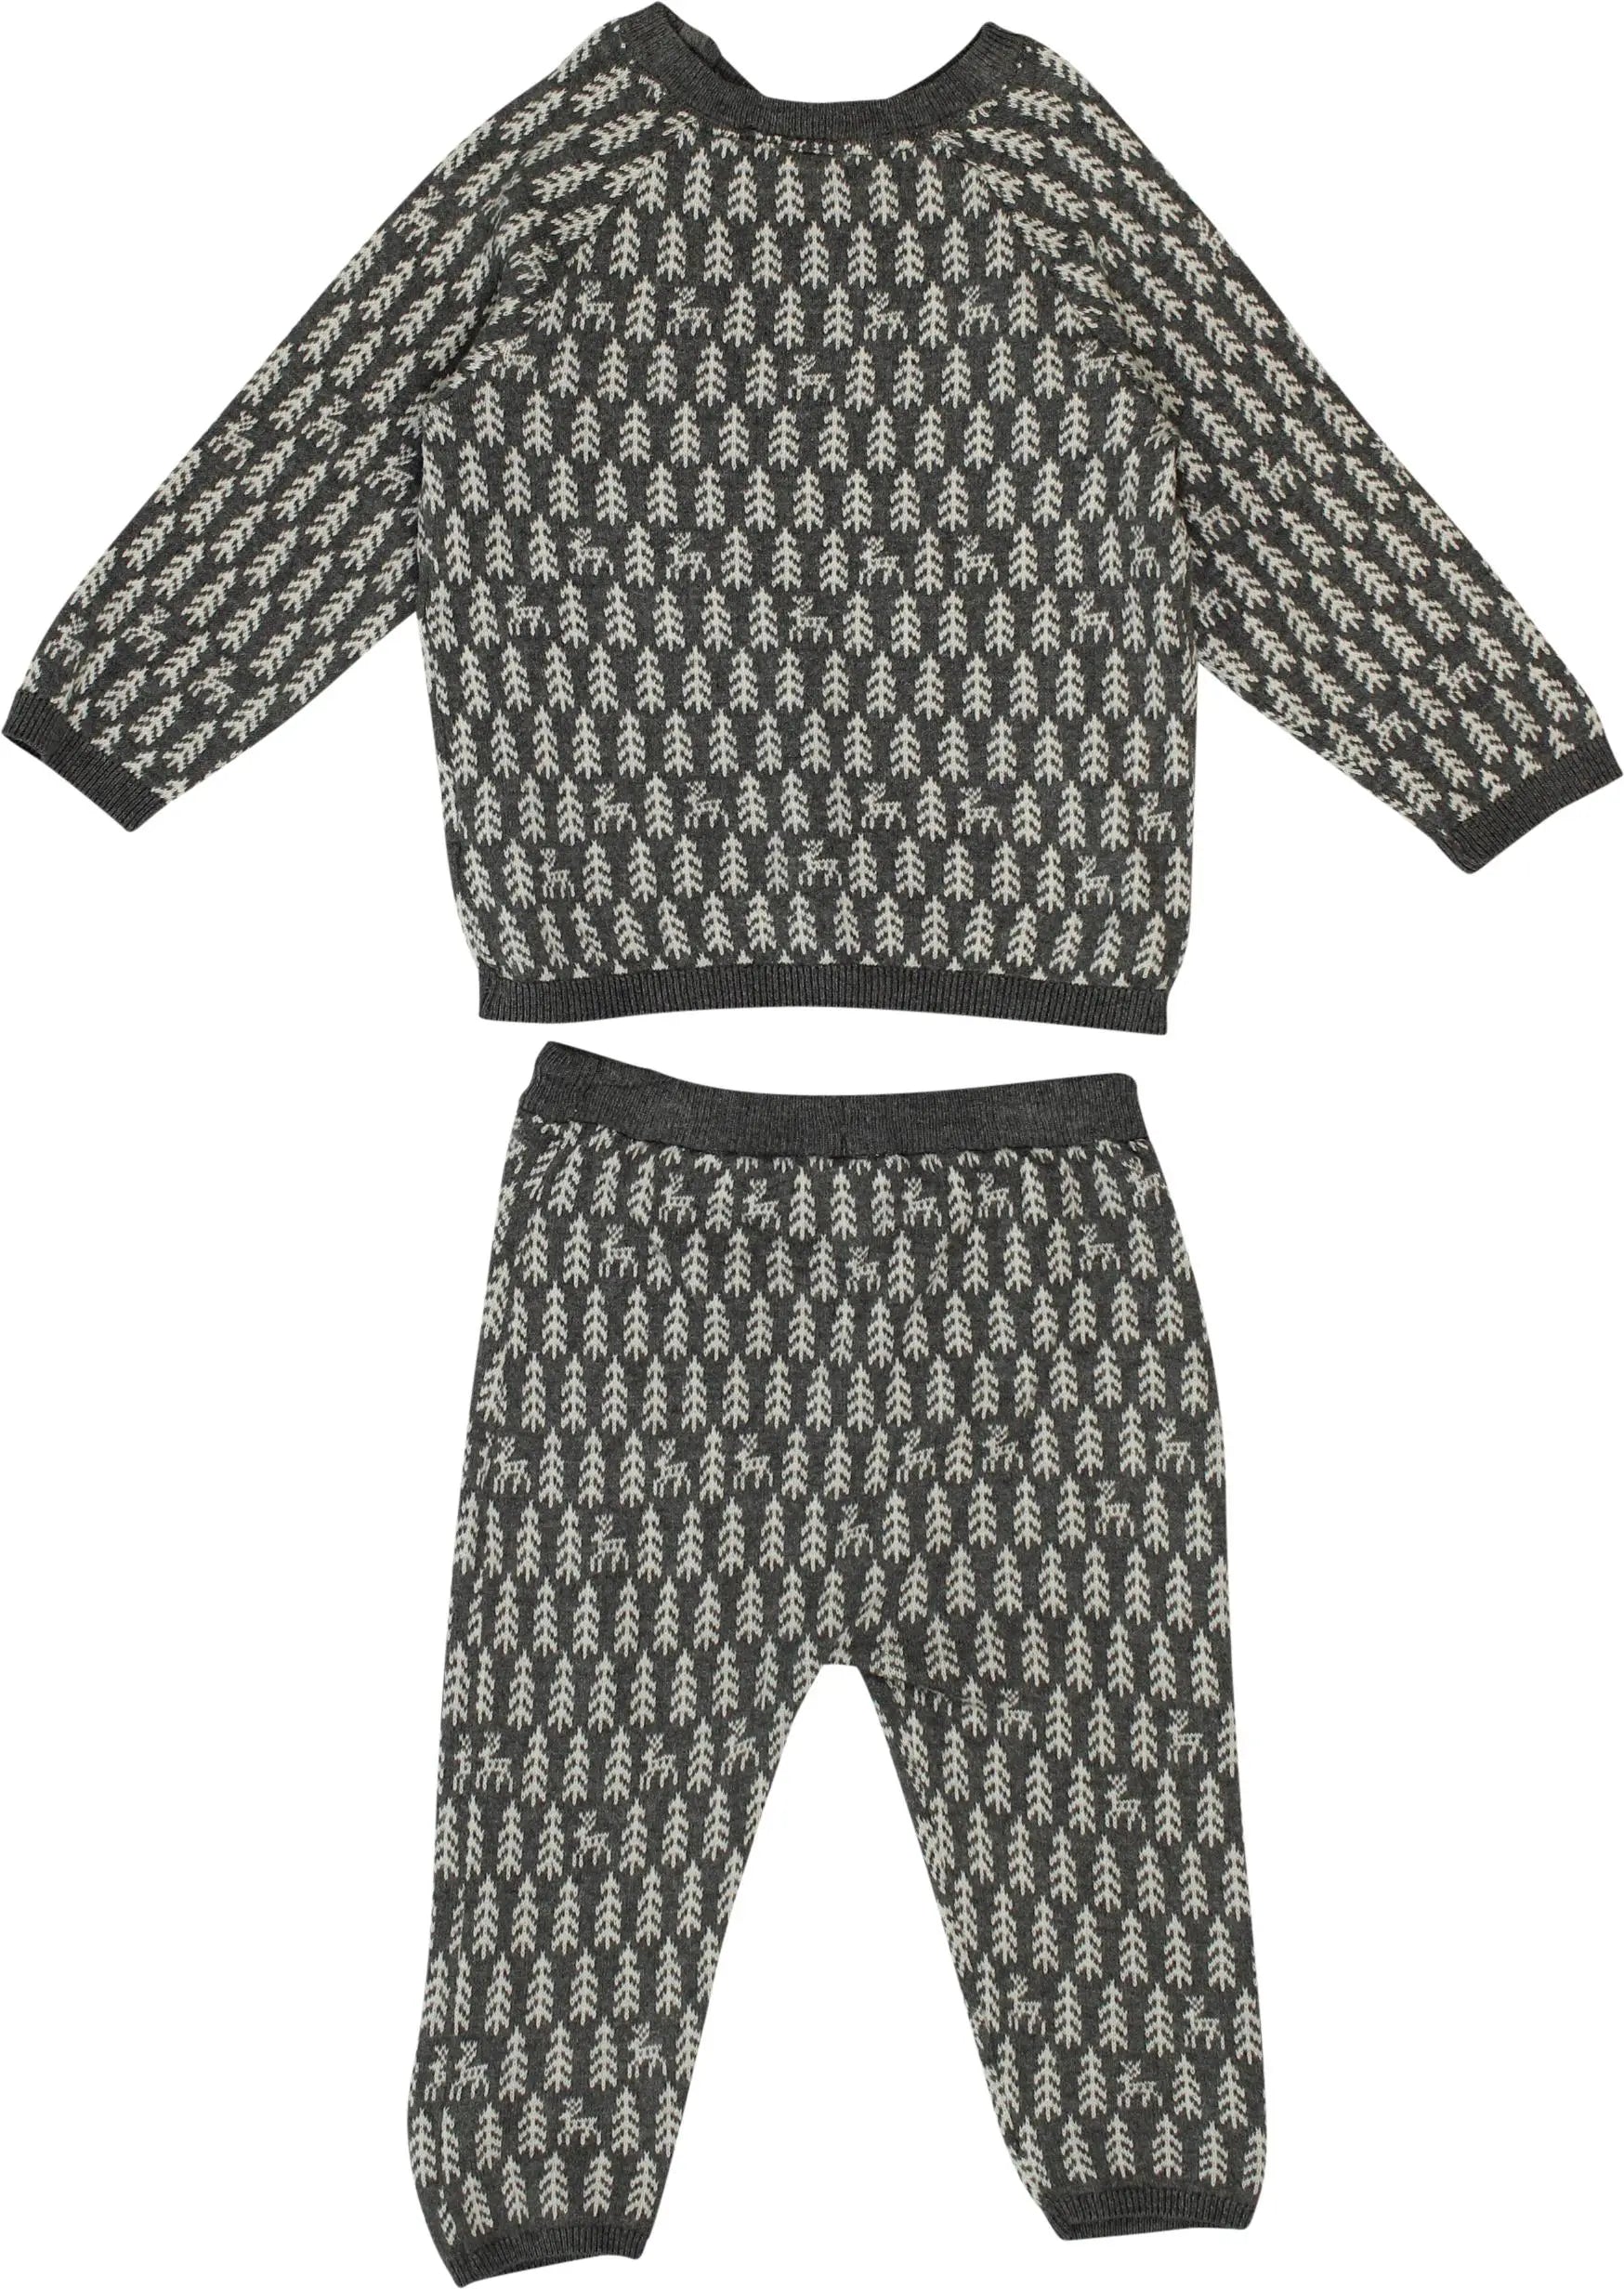 H&M - Pyjama Set- ThriftTale.com - Vintage and second handclothing